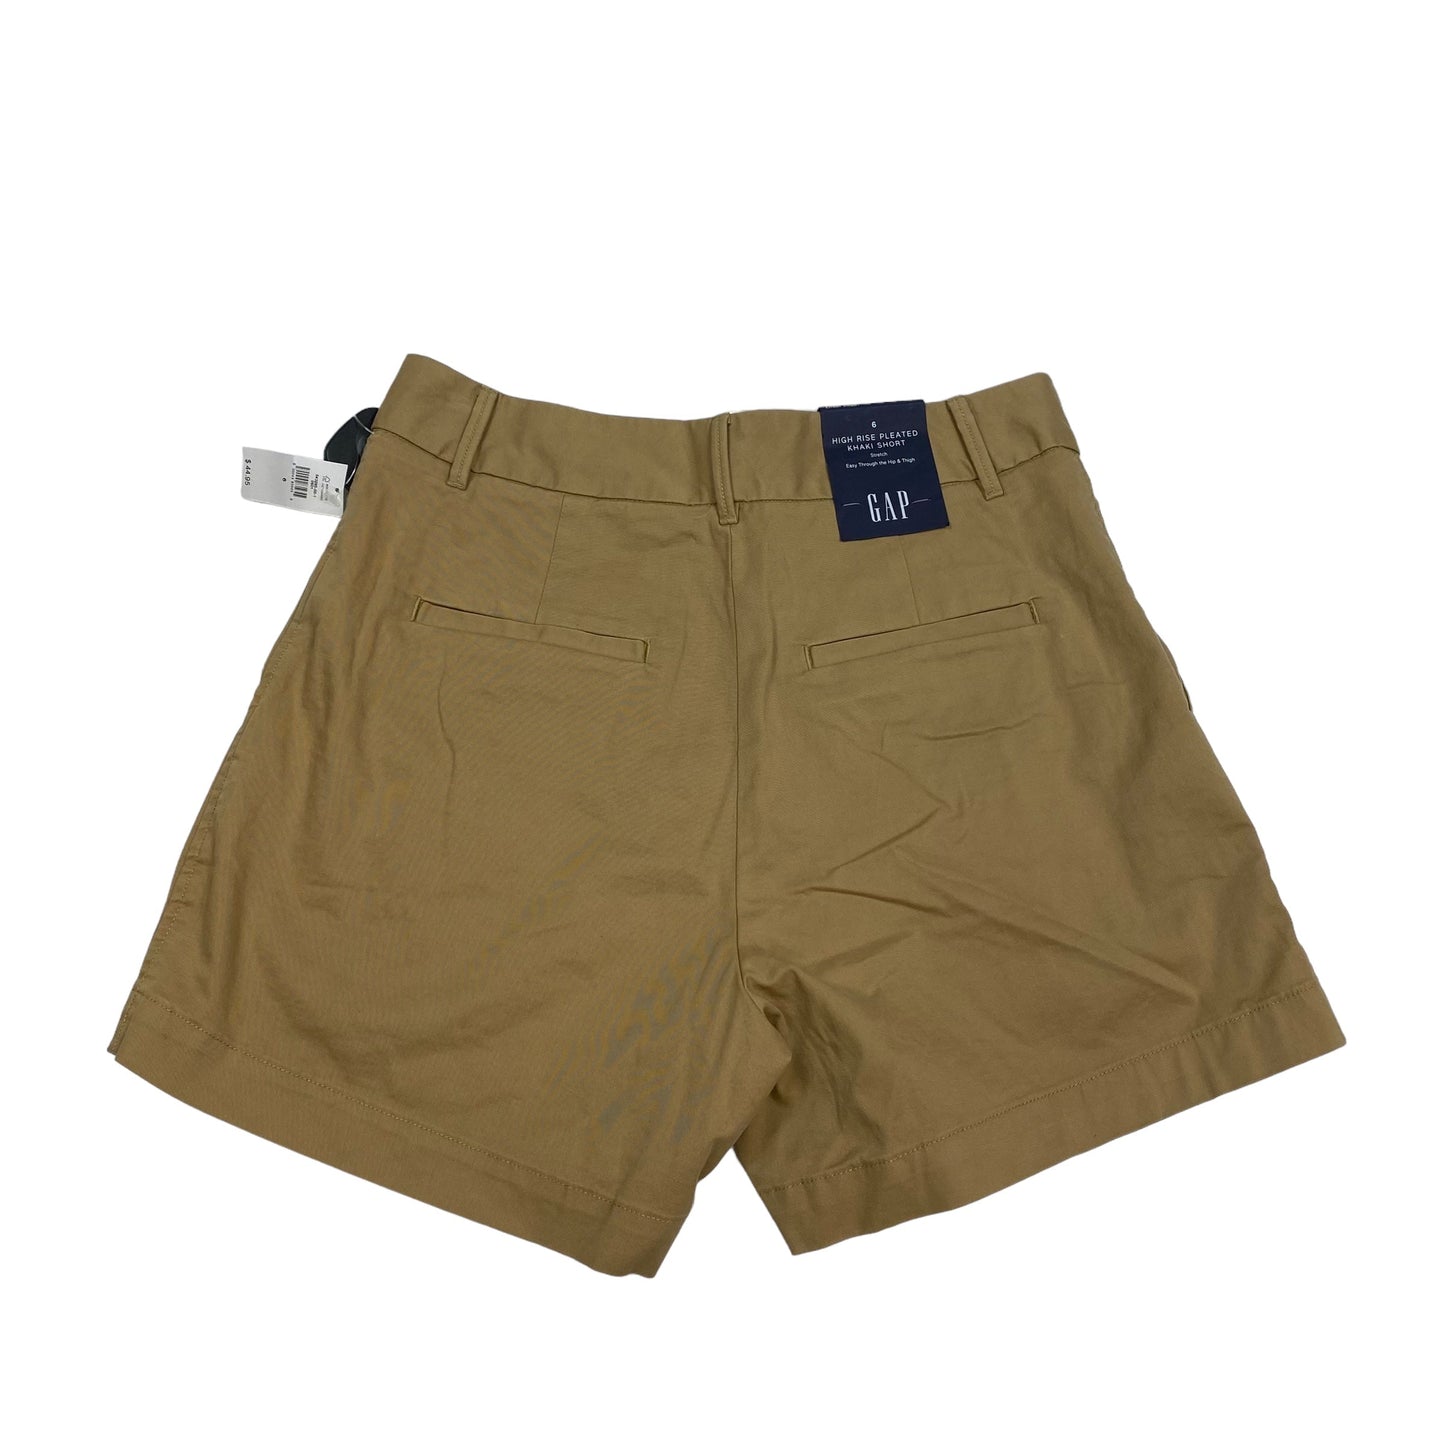 Tan Shorts Gap, Size 6